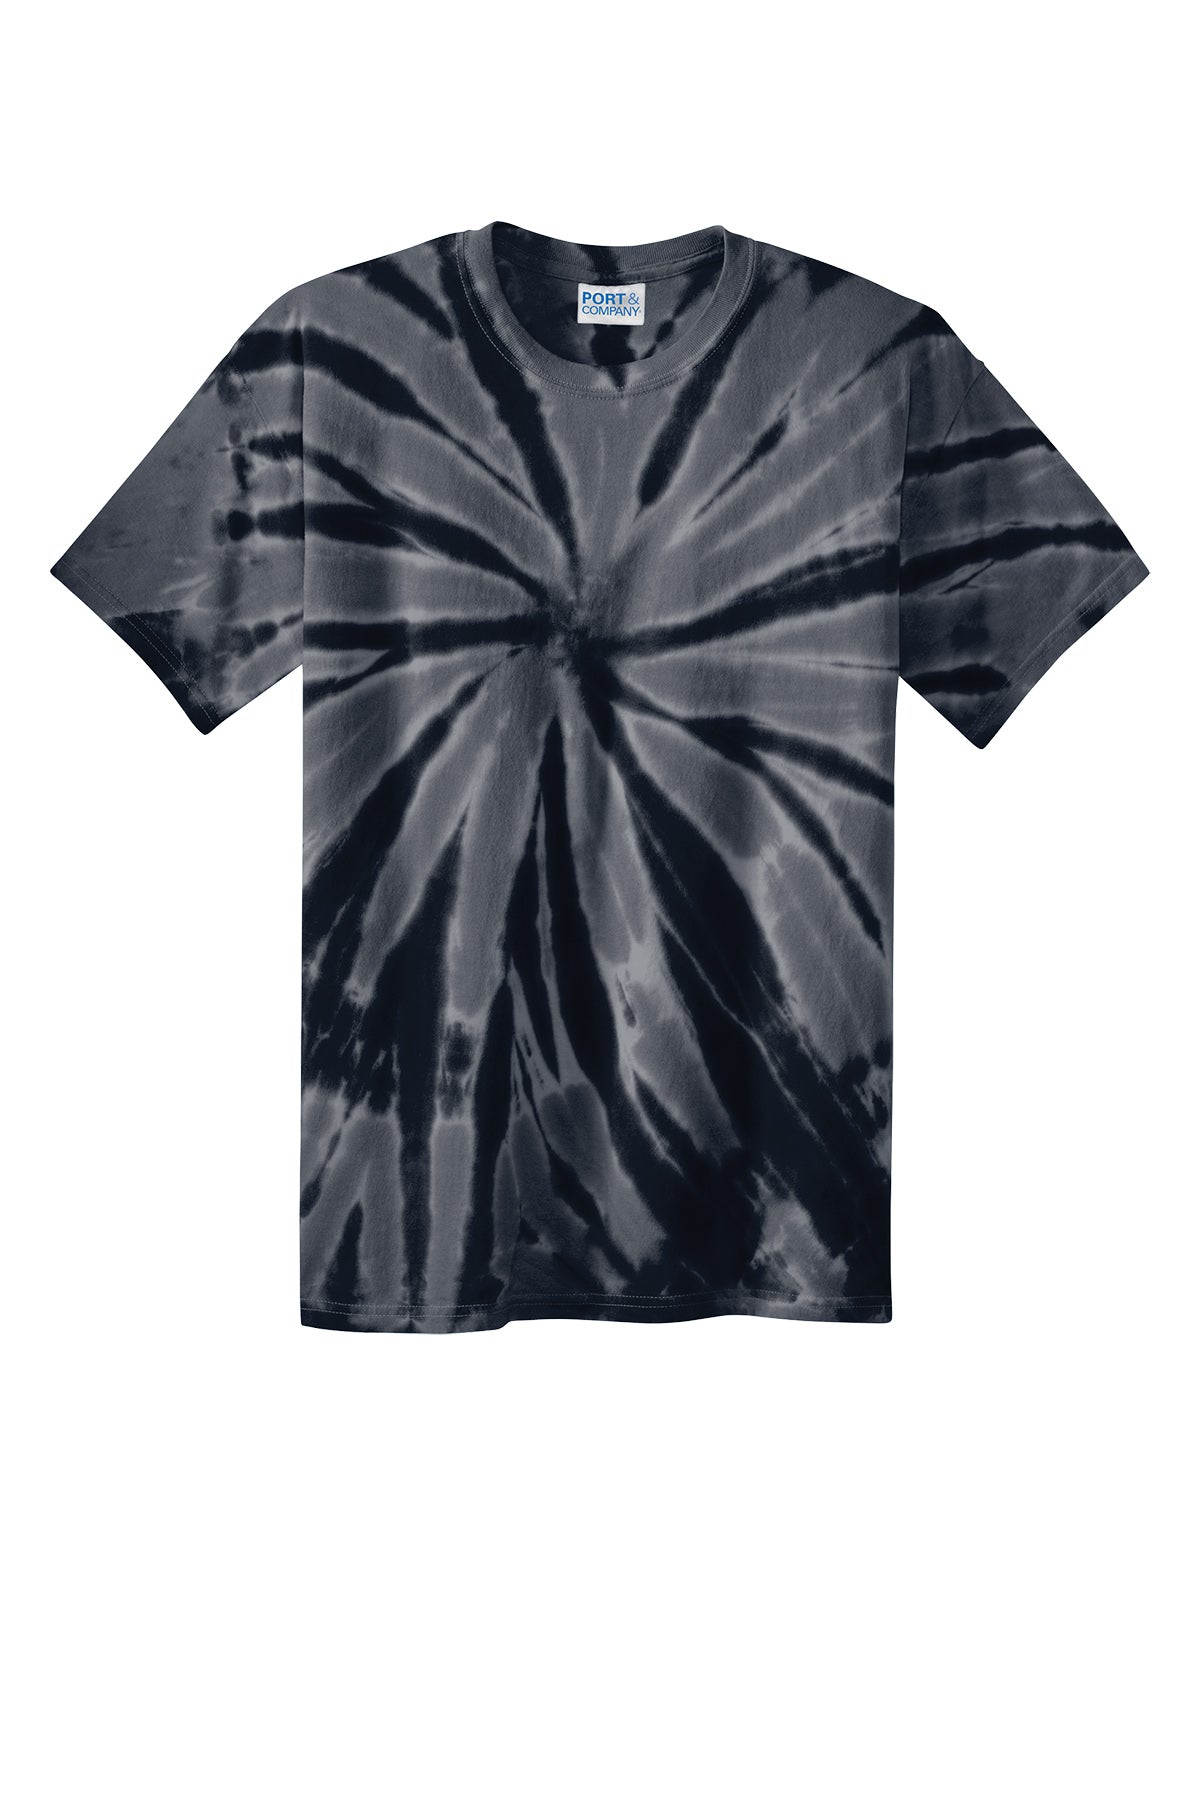 Port & Co Pc147 Short Sleeve Tie-Dye Shirt